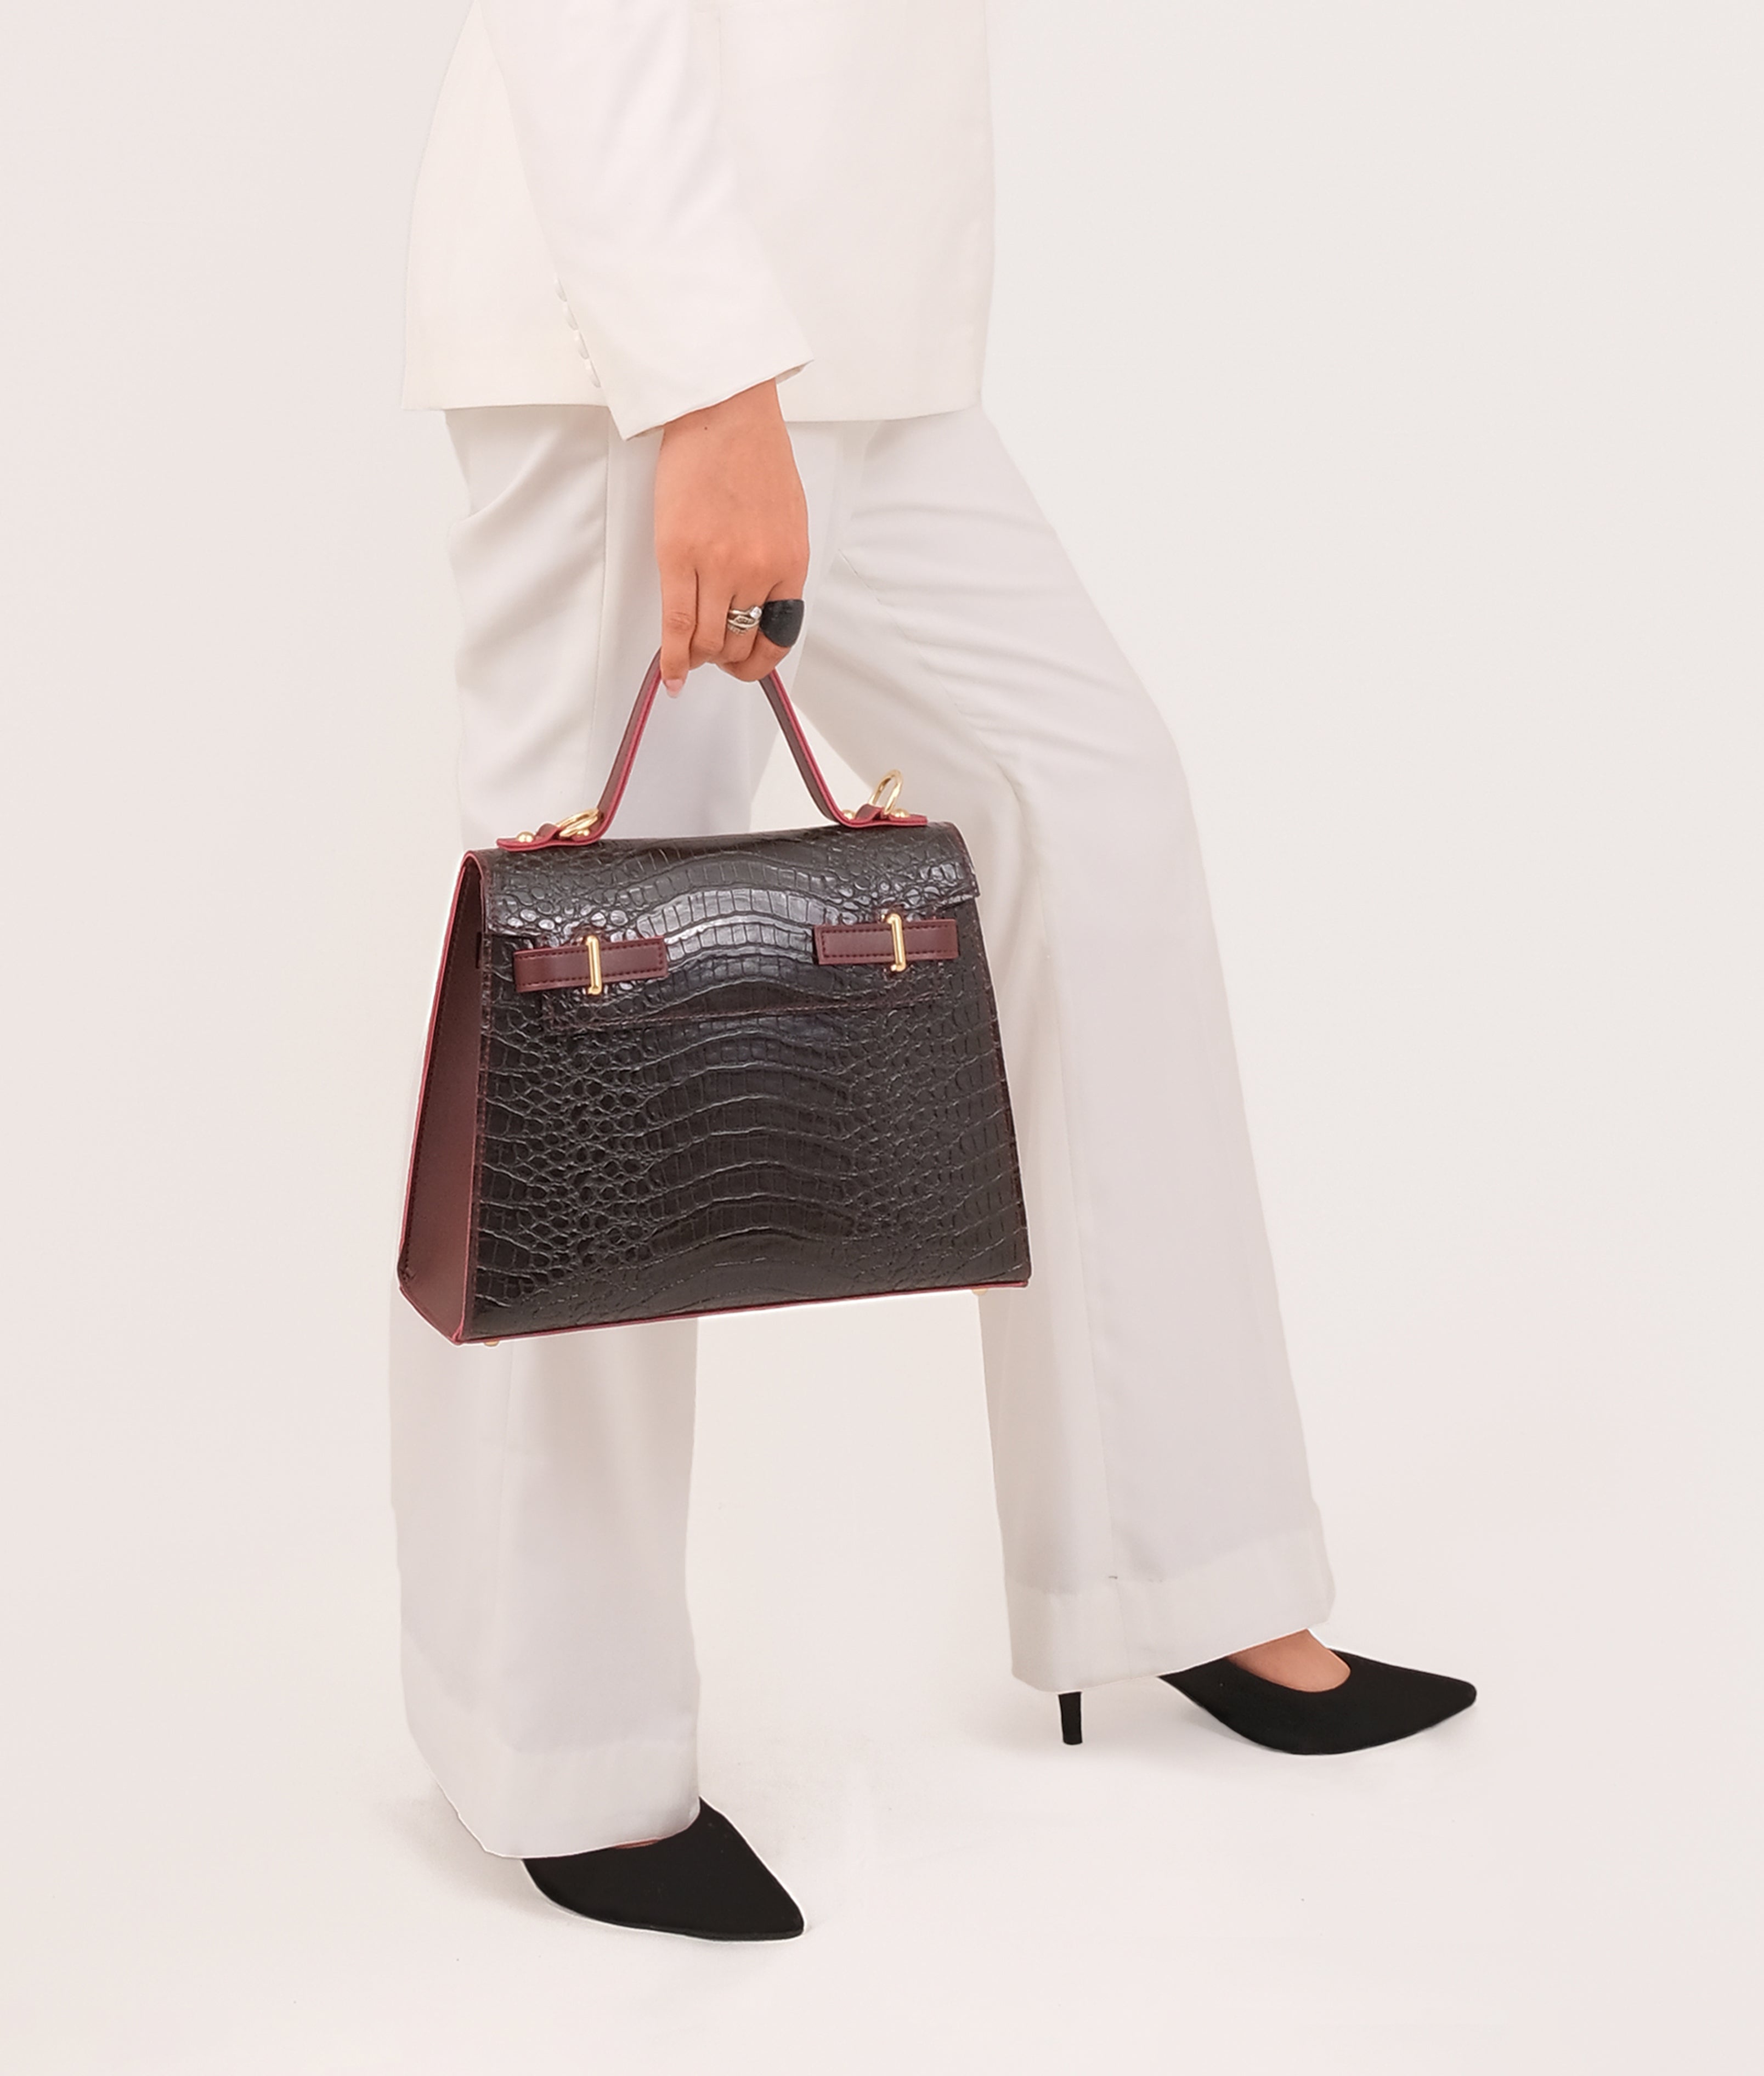 Burgundy and black crocodile cross-body bag with top-handle